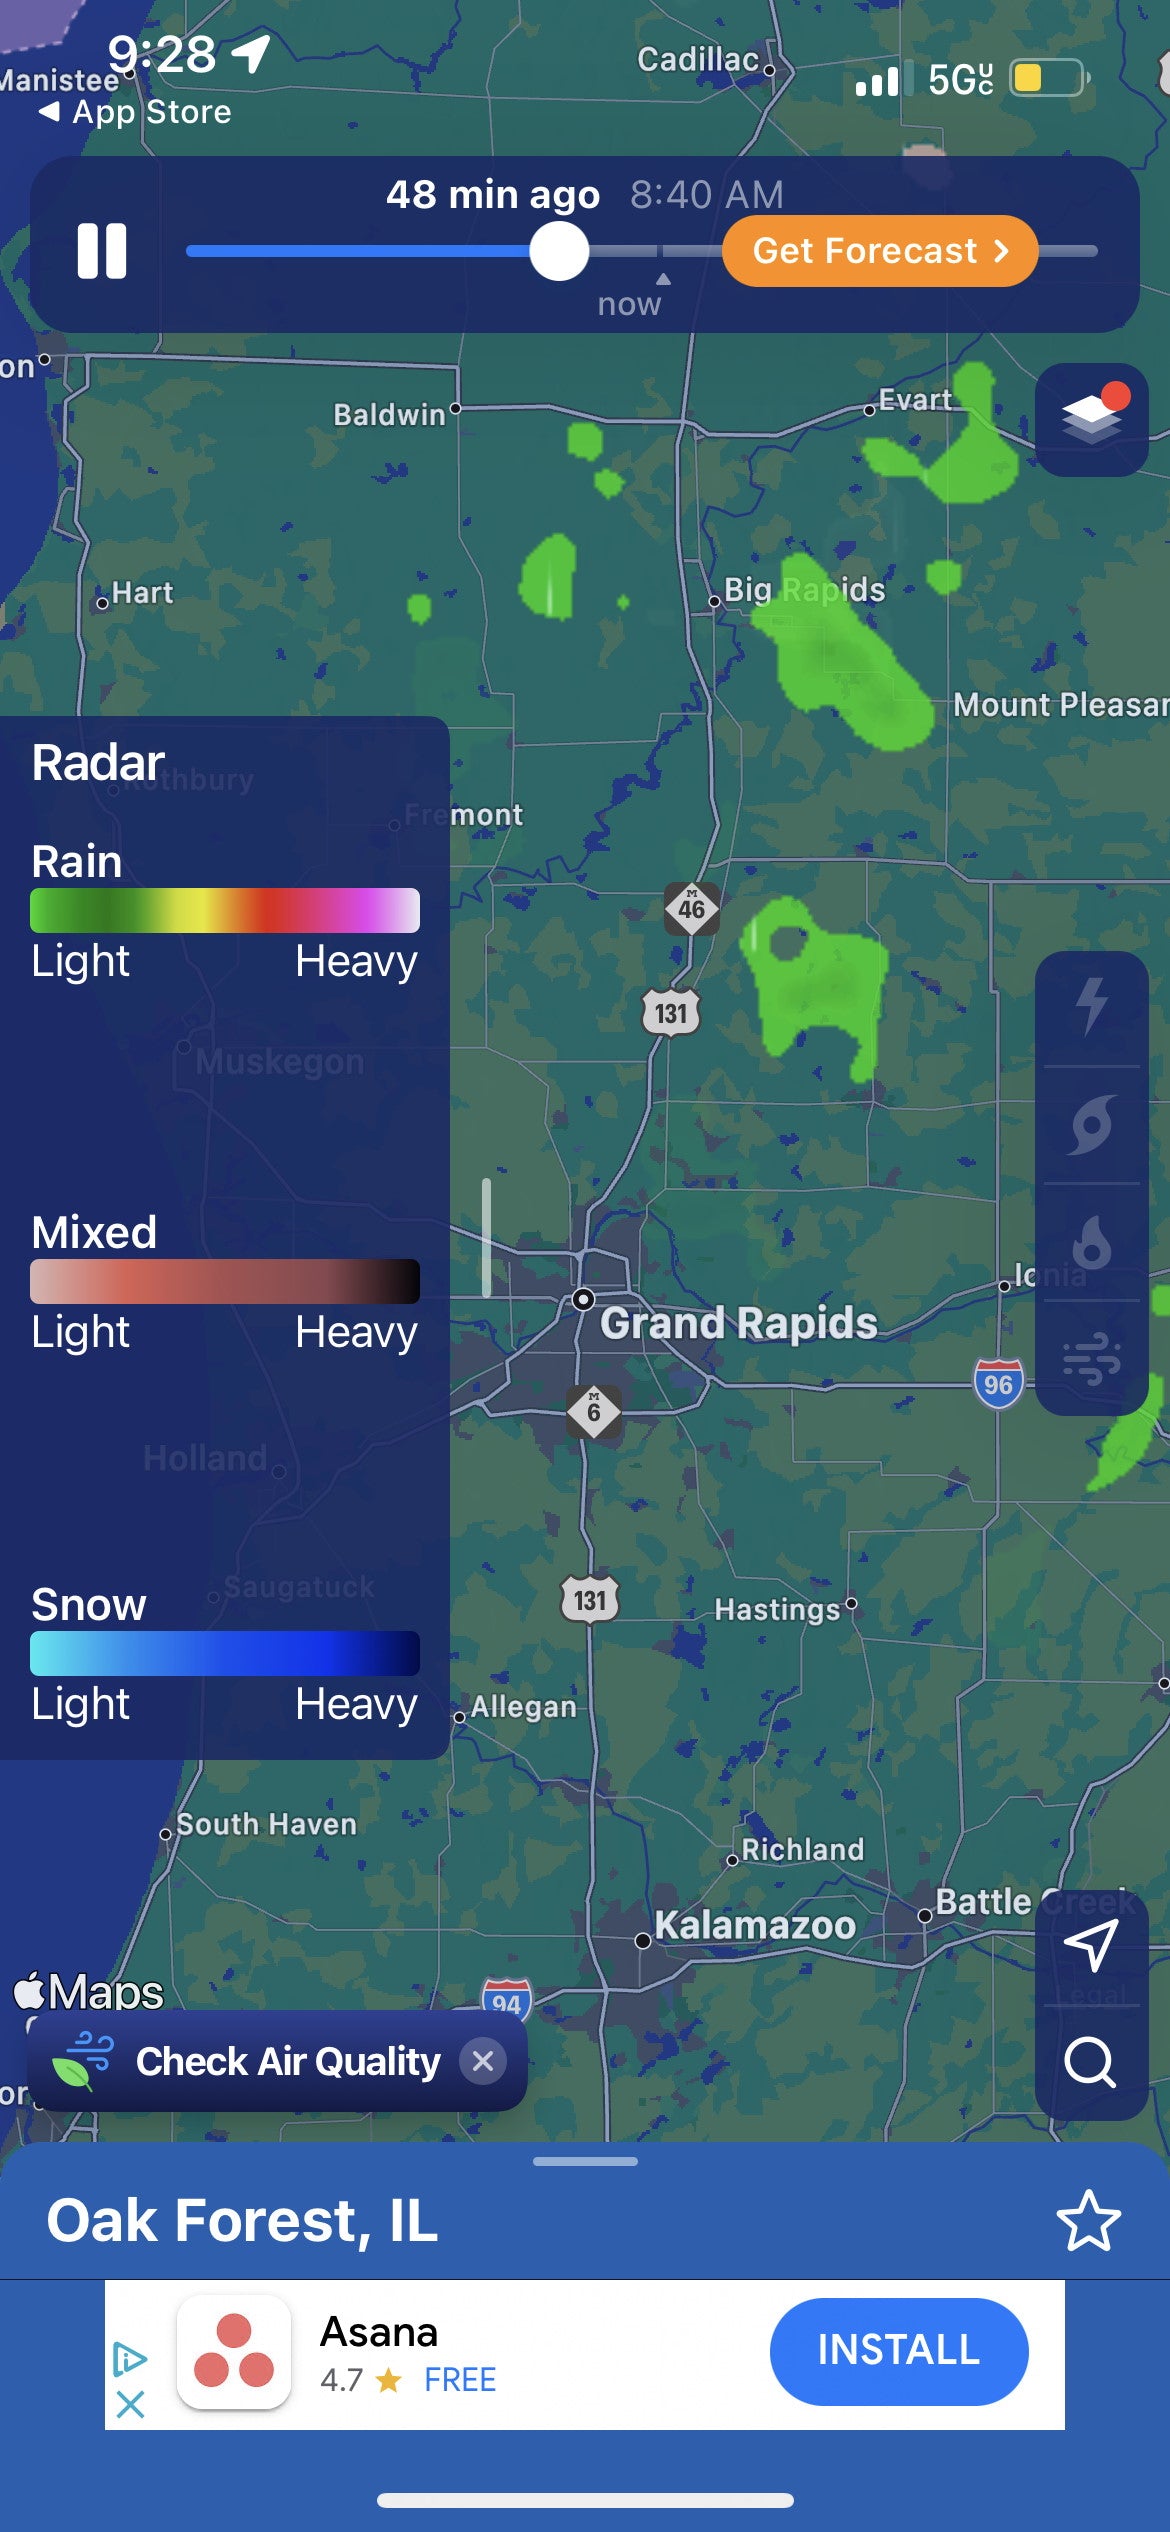 NOAA Weather Live App screen shots on iPhone